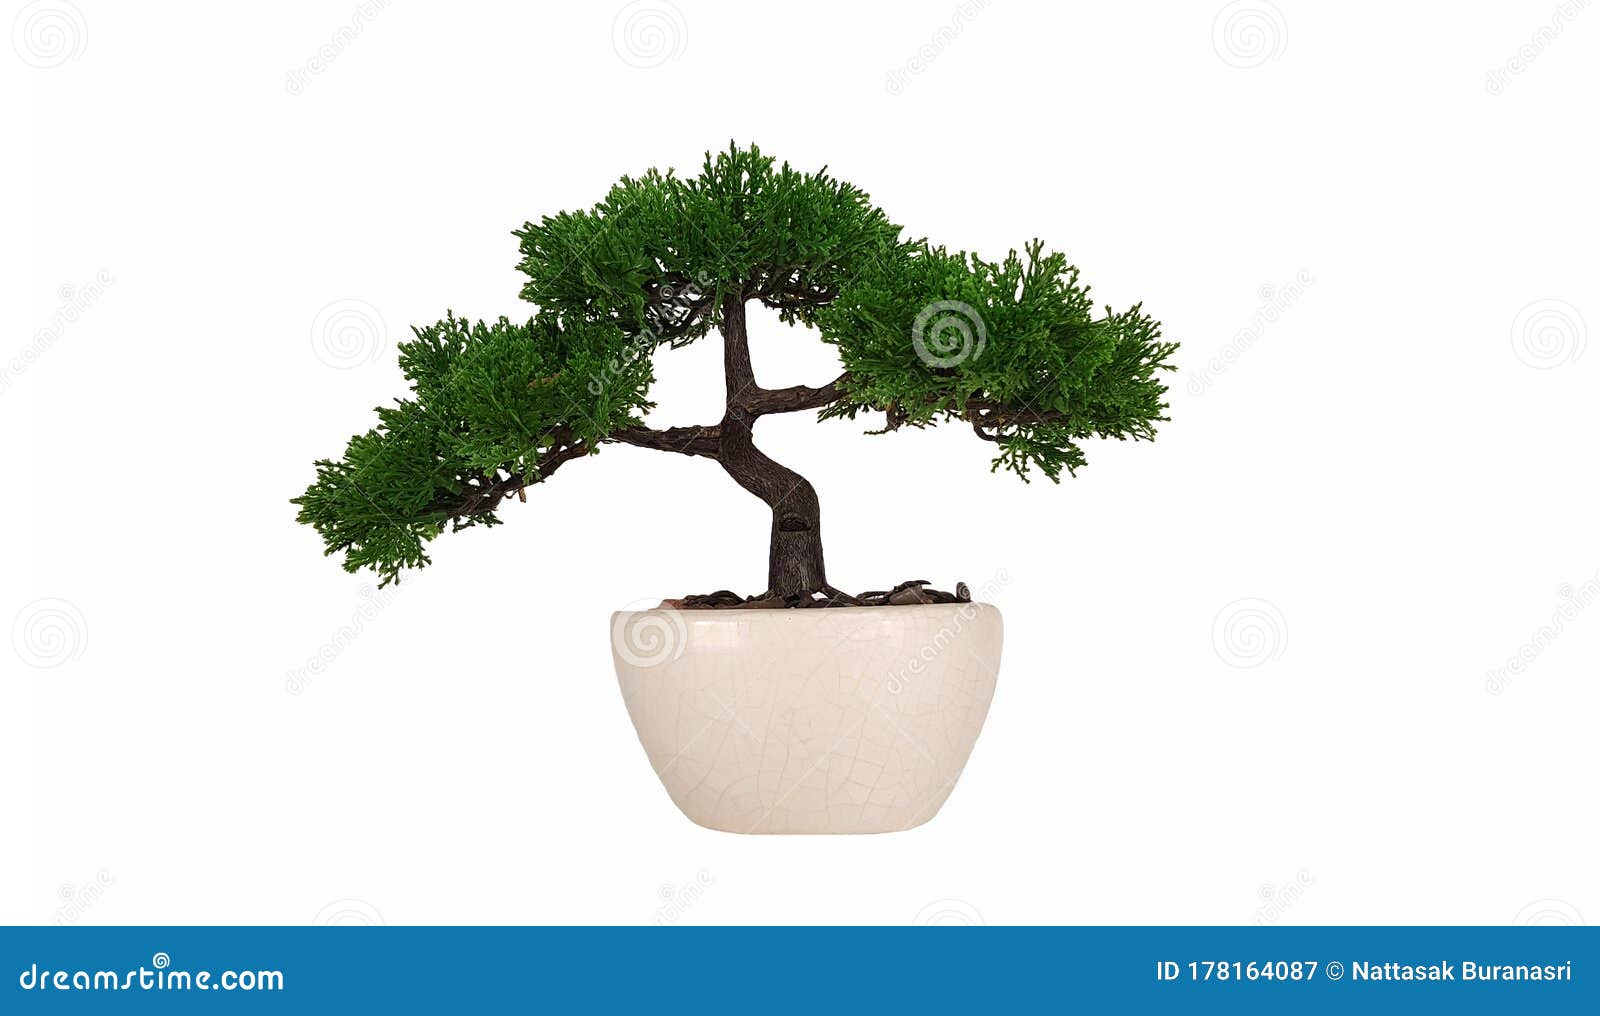 Bonsai Tree in White Ceramic Flower Pot Stock Image   Image of ...